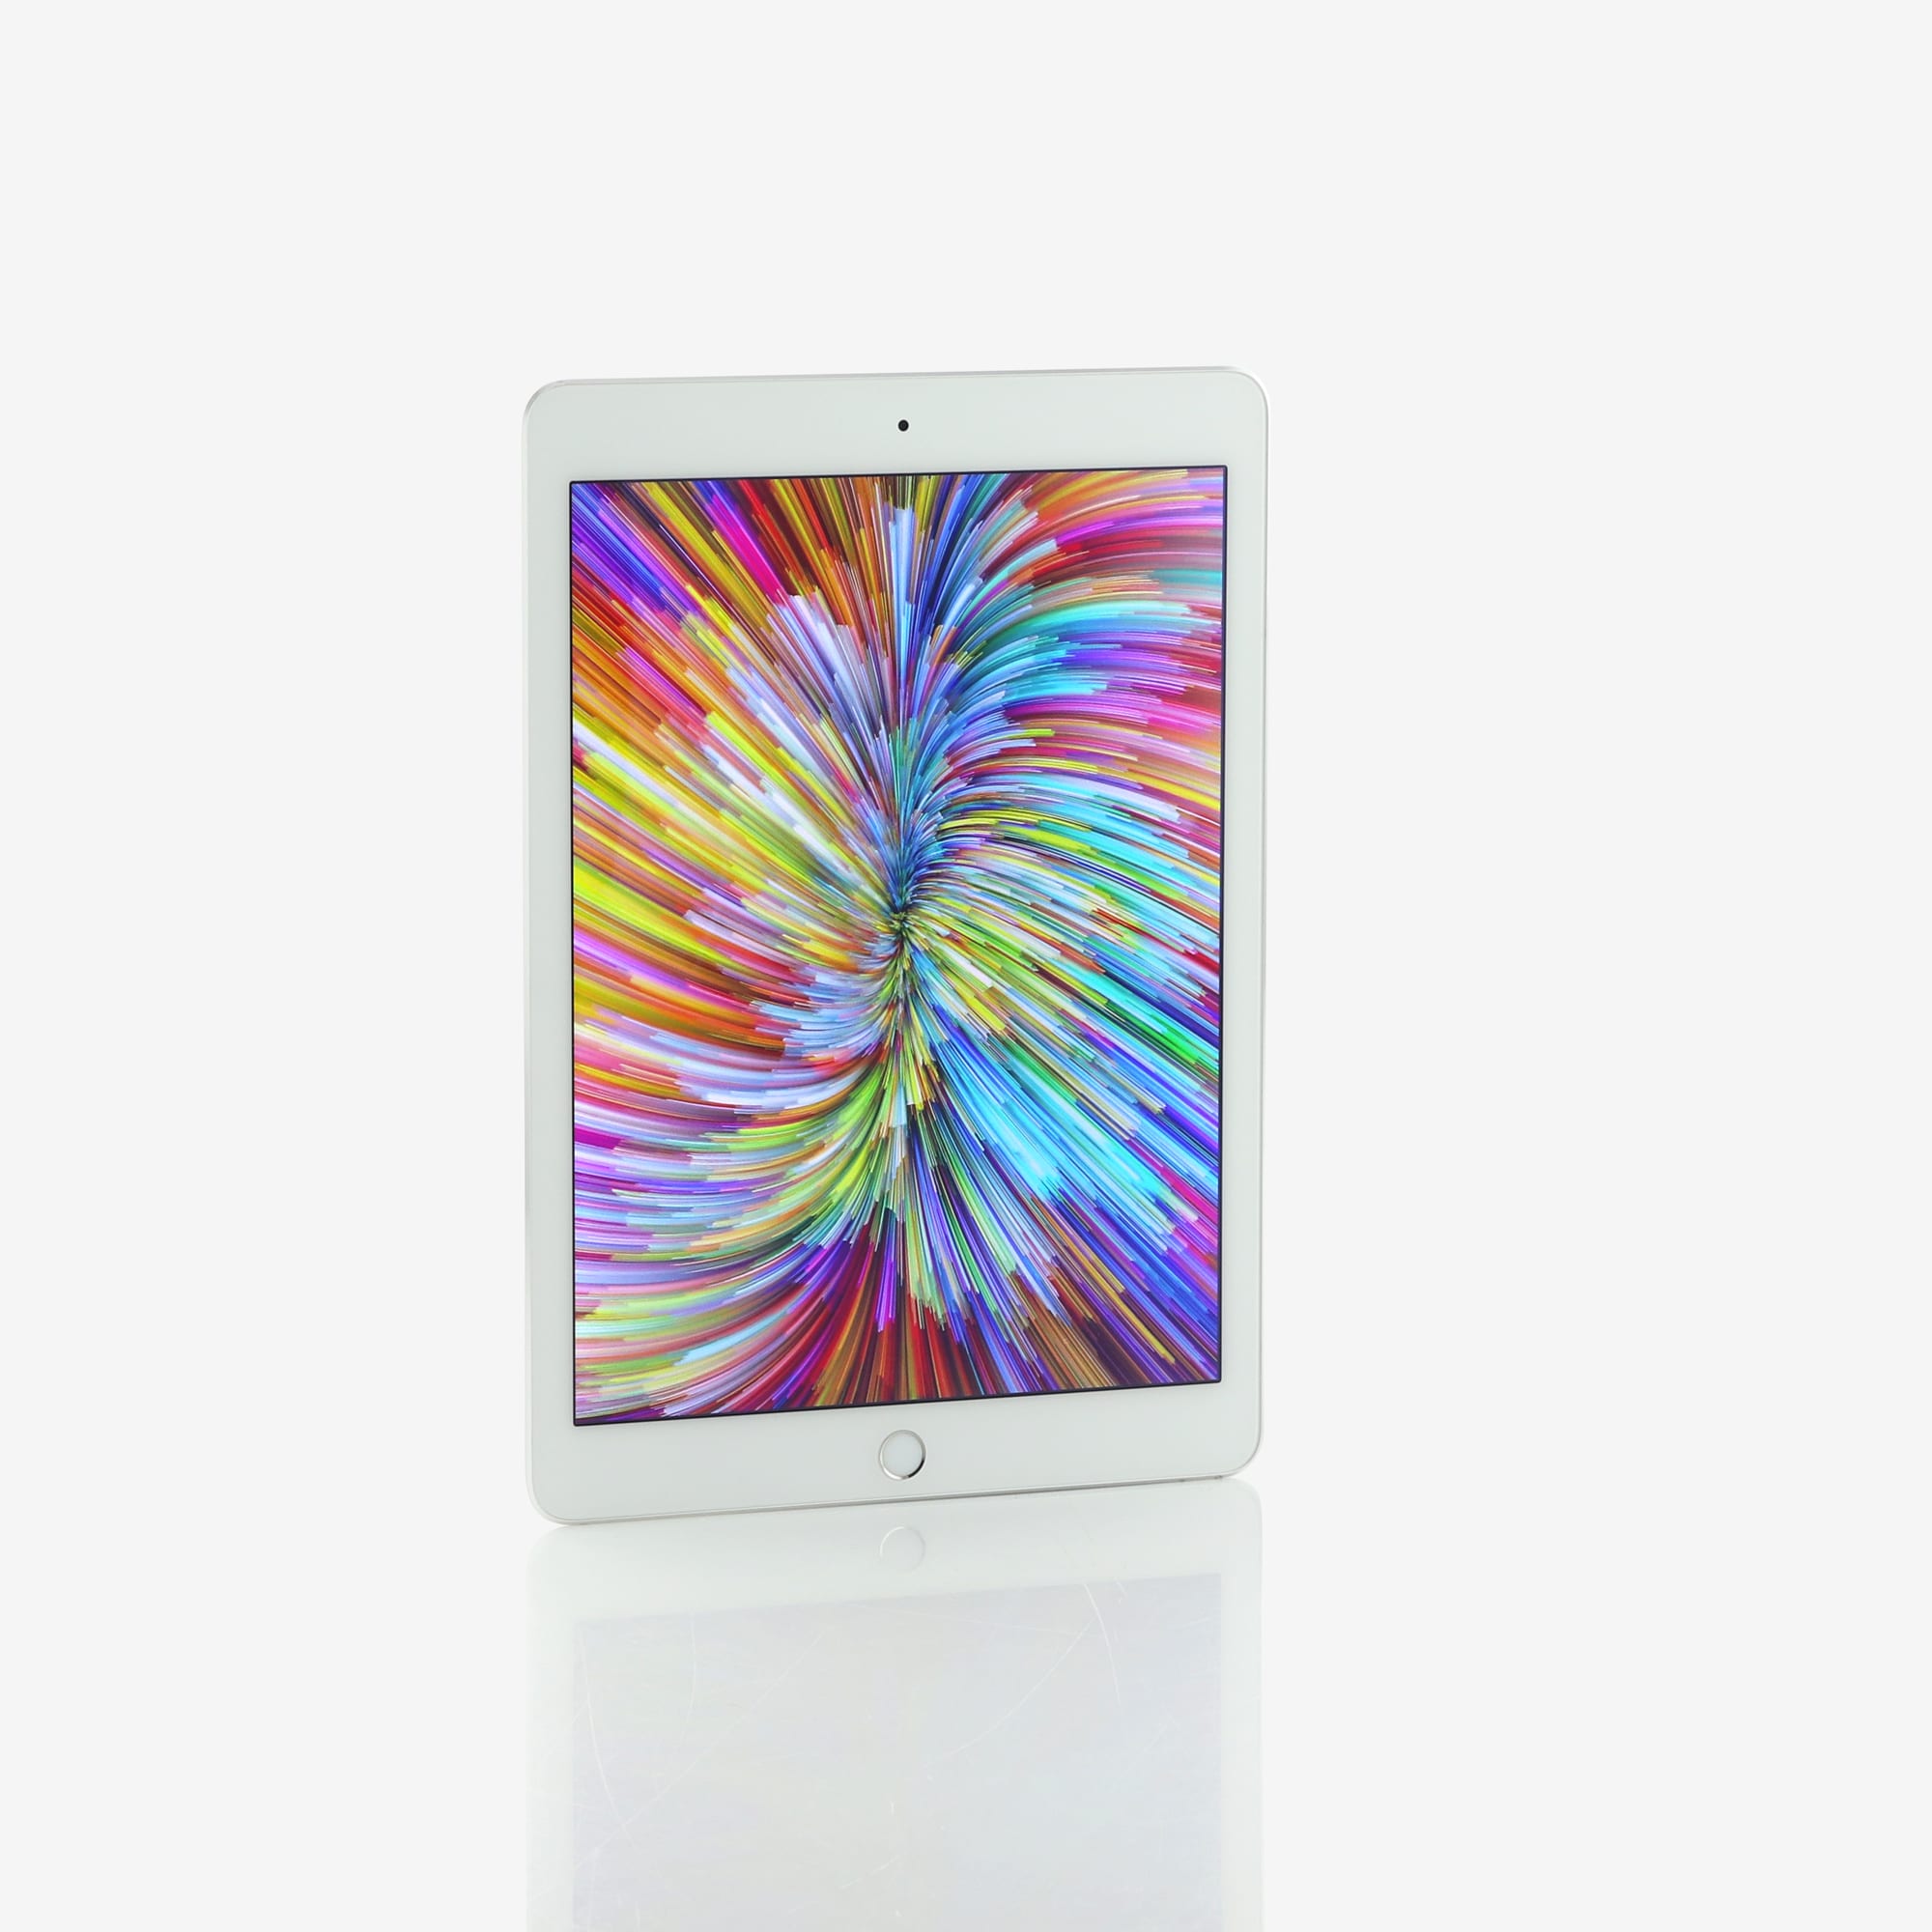 1 x iPad Air 2 (Wi-Fi) Silver